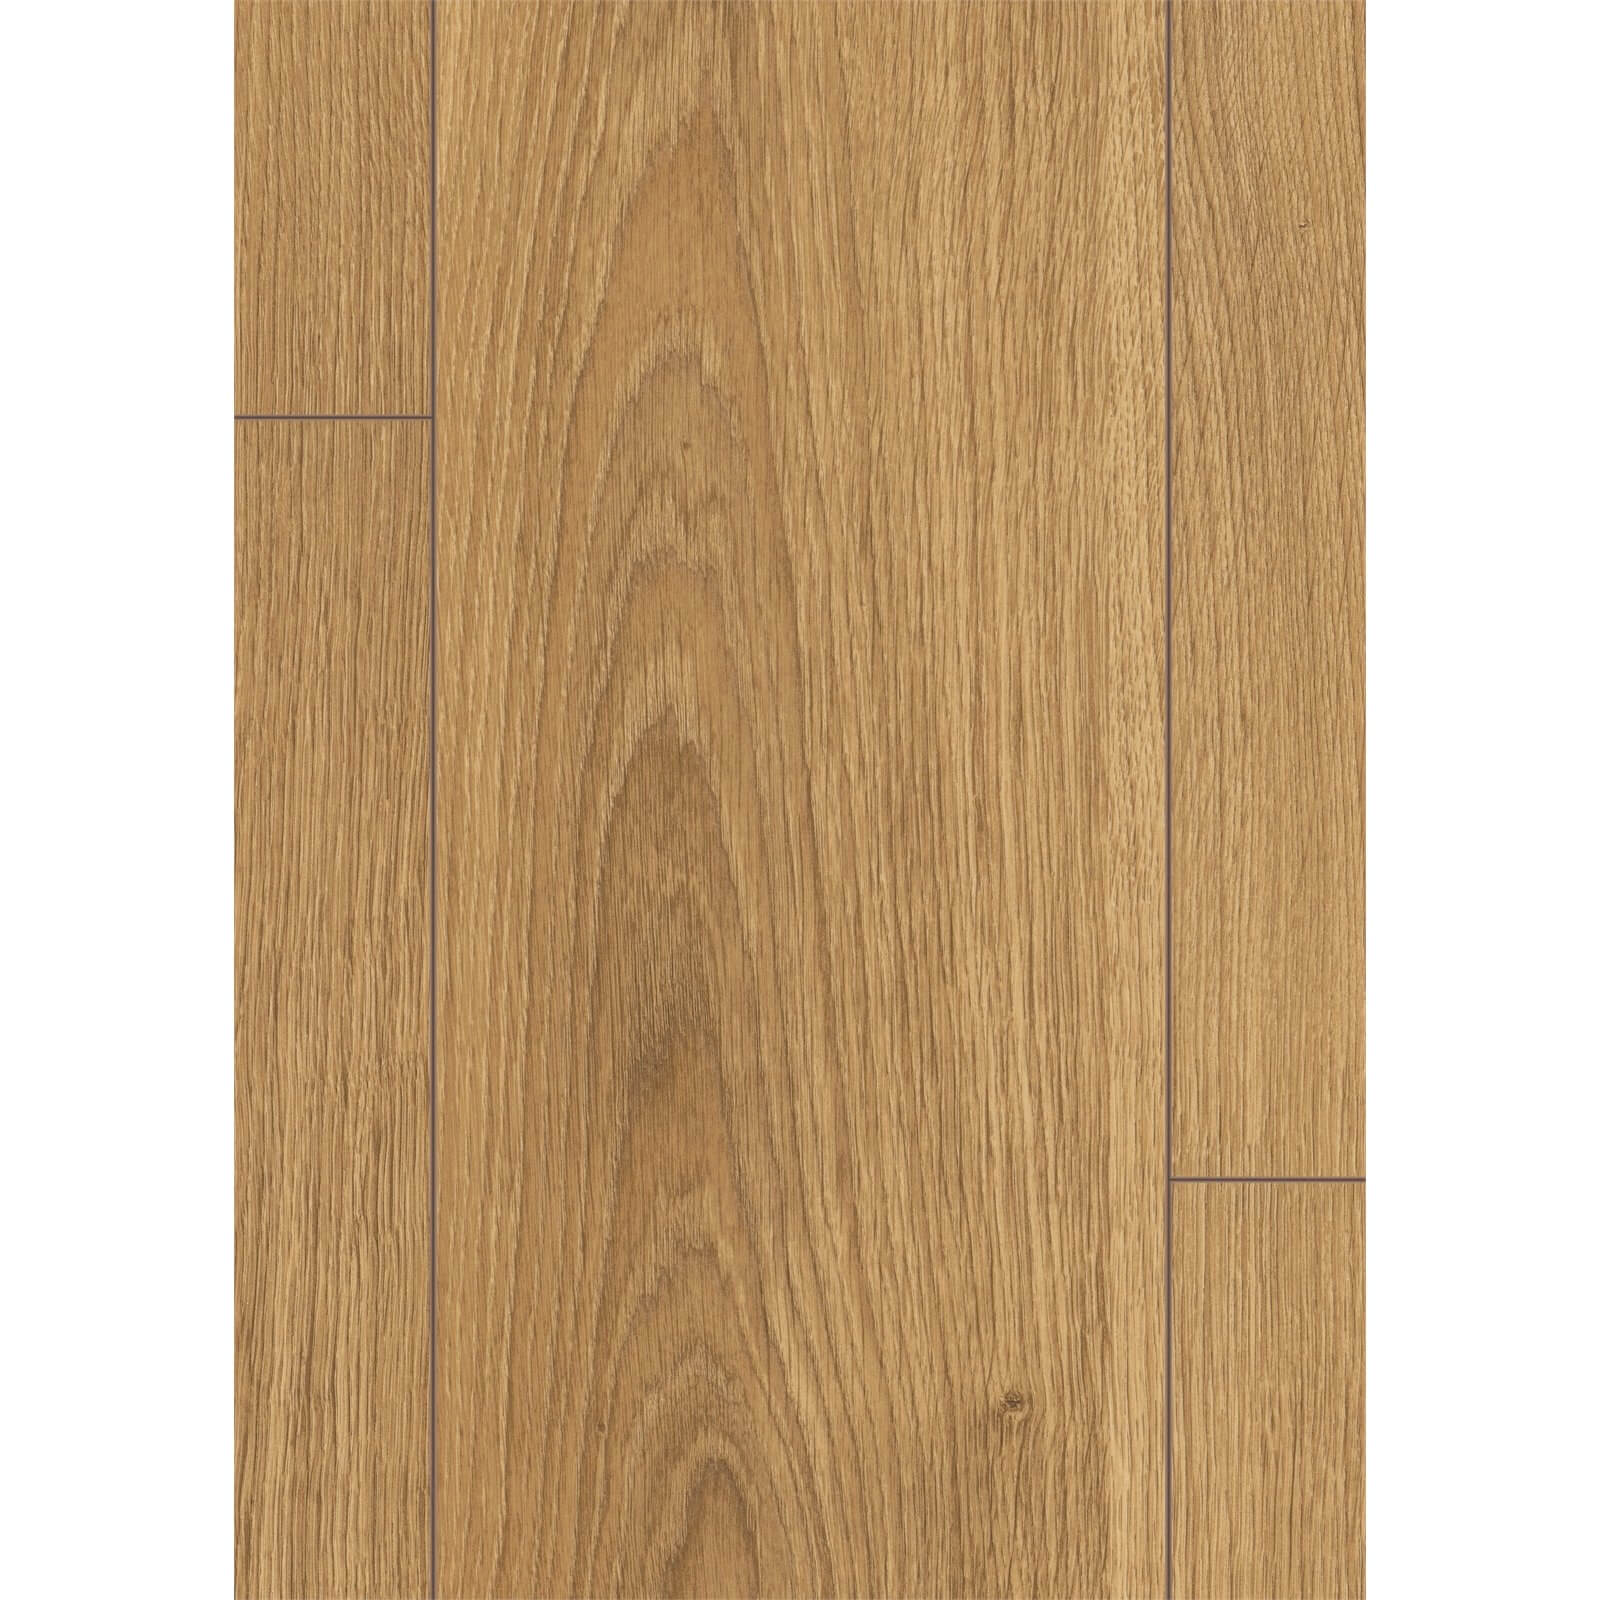 EGGER HOME Honey Brook Oak 12mm Laminate Flooring - 1.49 sqm Pack